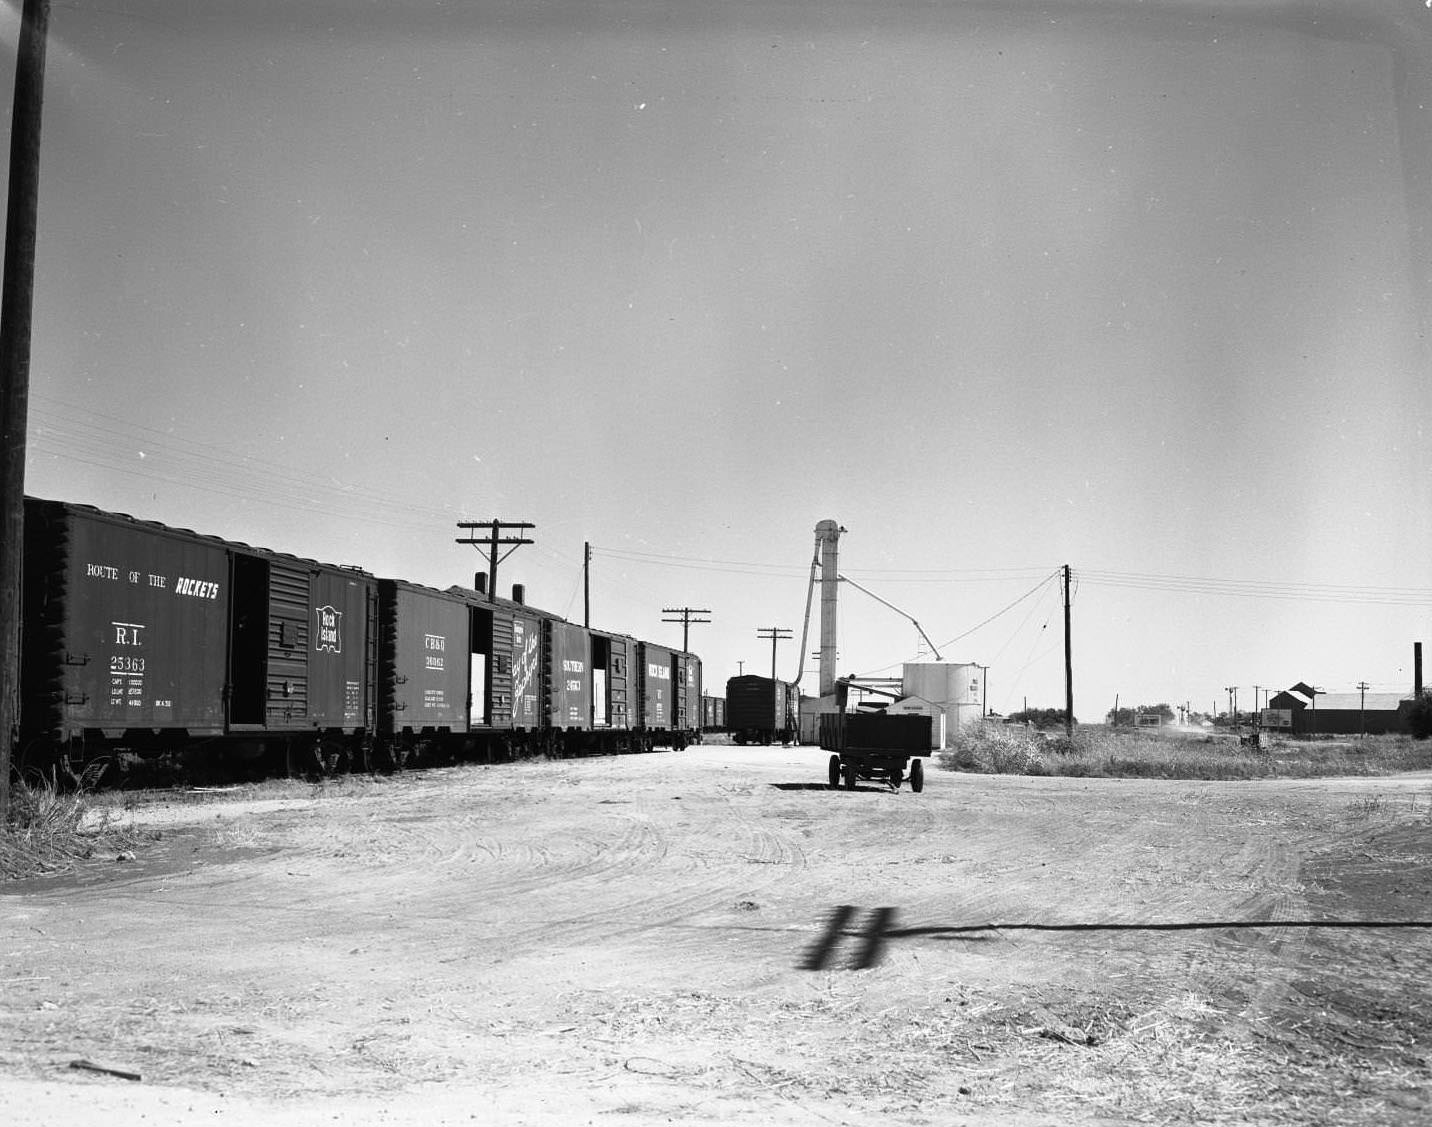 Train and Farm Machinery, 1959